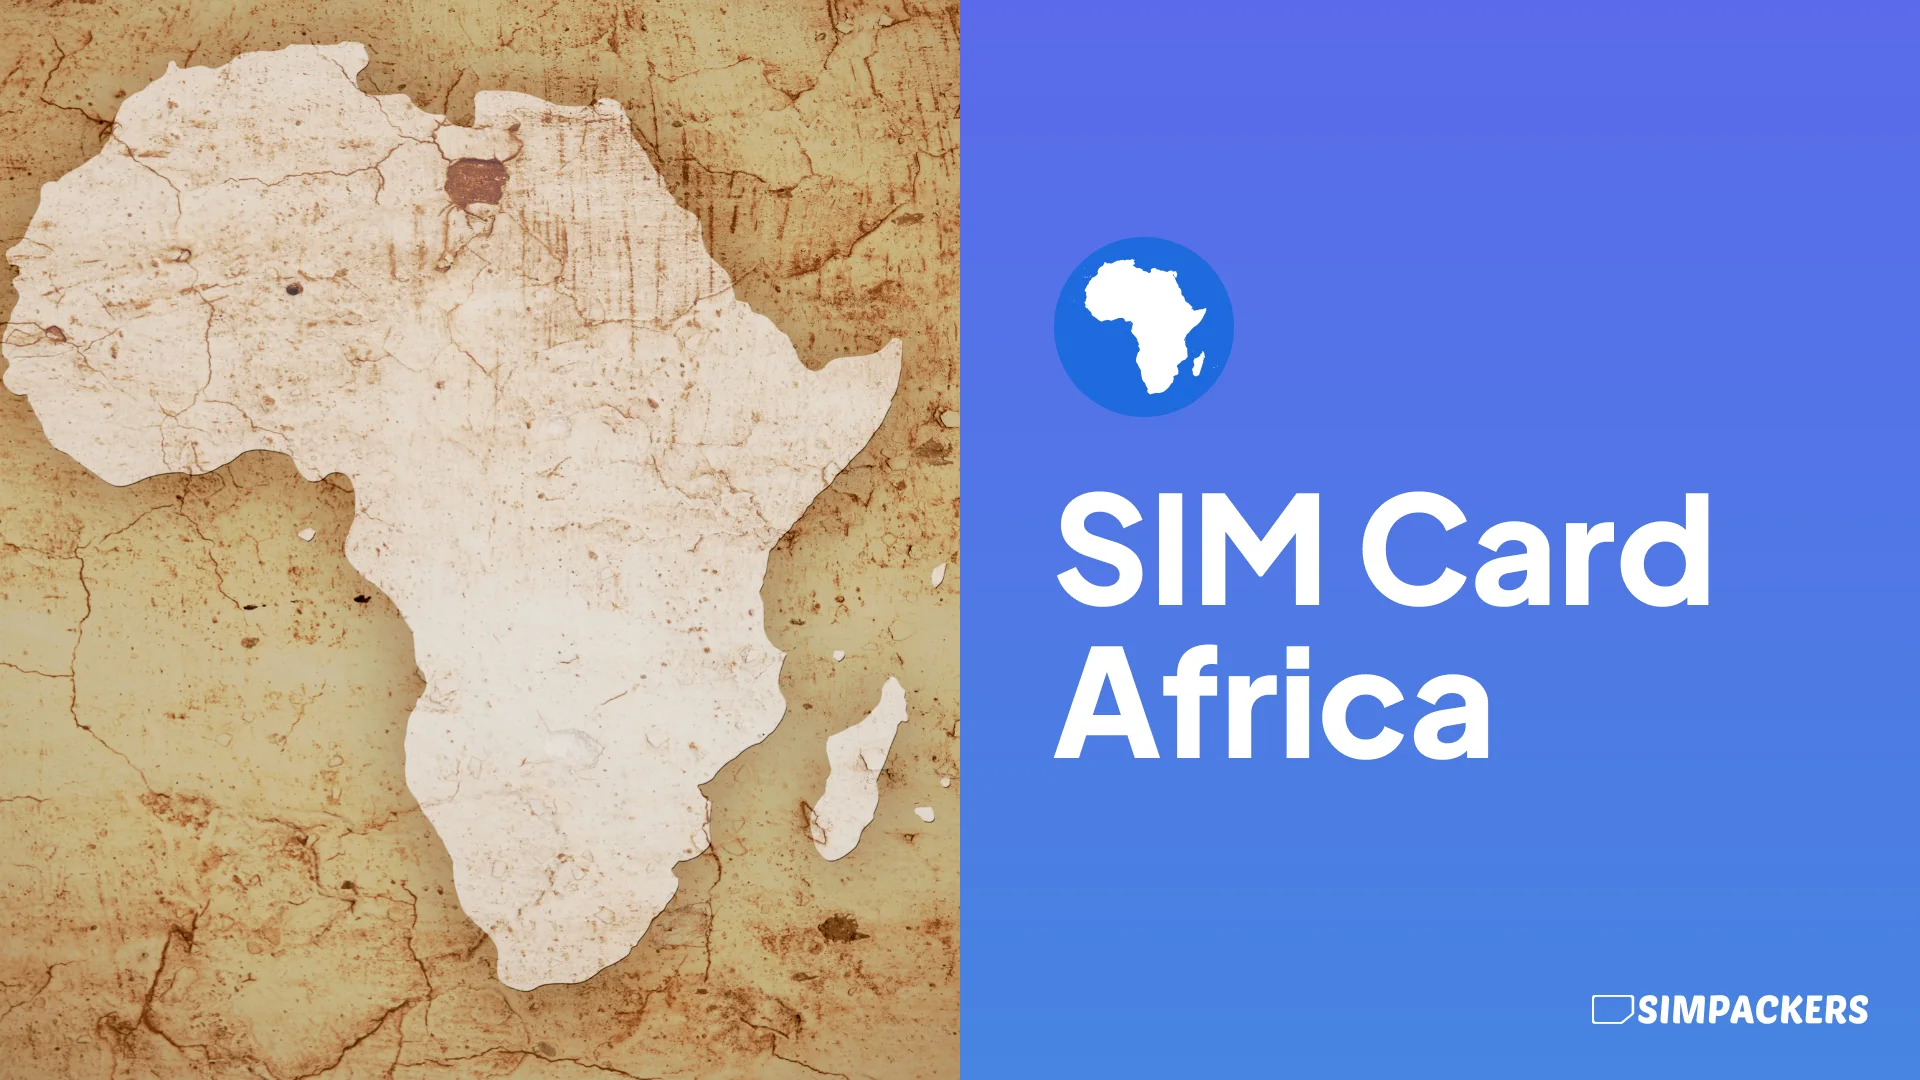 EN/FEATURED_IMAGES/sim-card-africa.webp